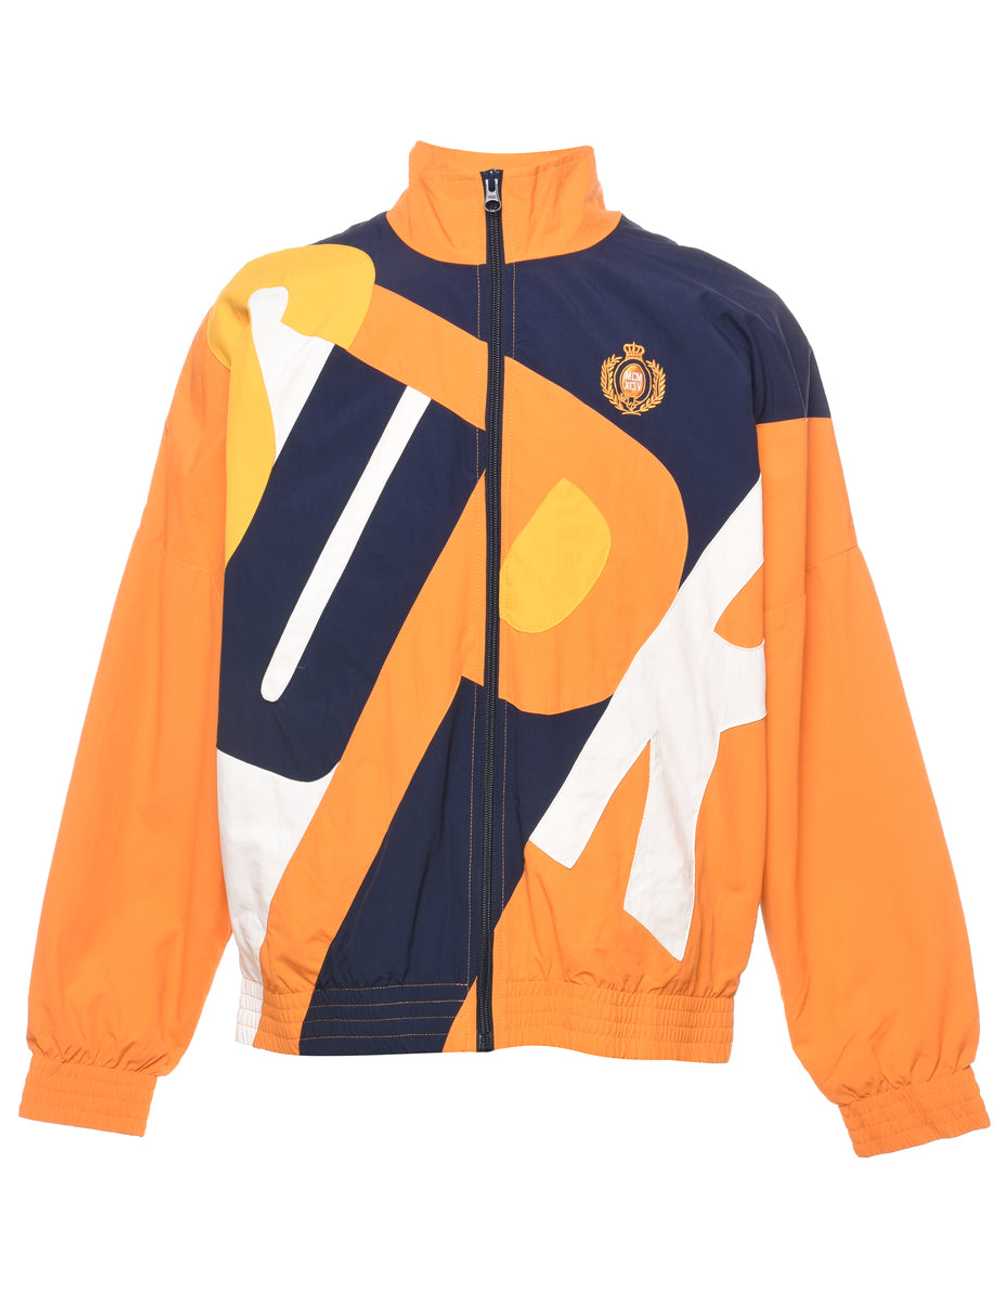 Supreme Navy & Orange Printed Jacket - S - image 1